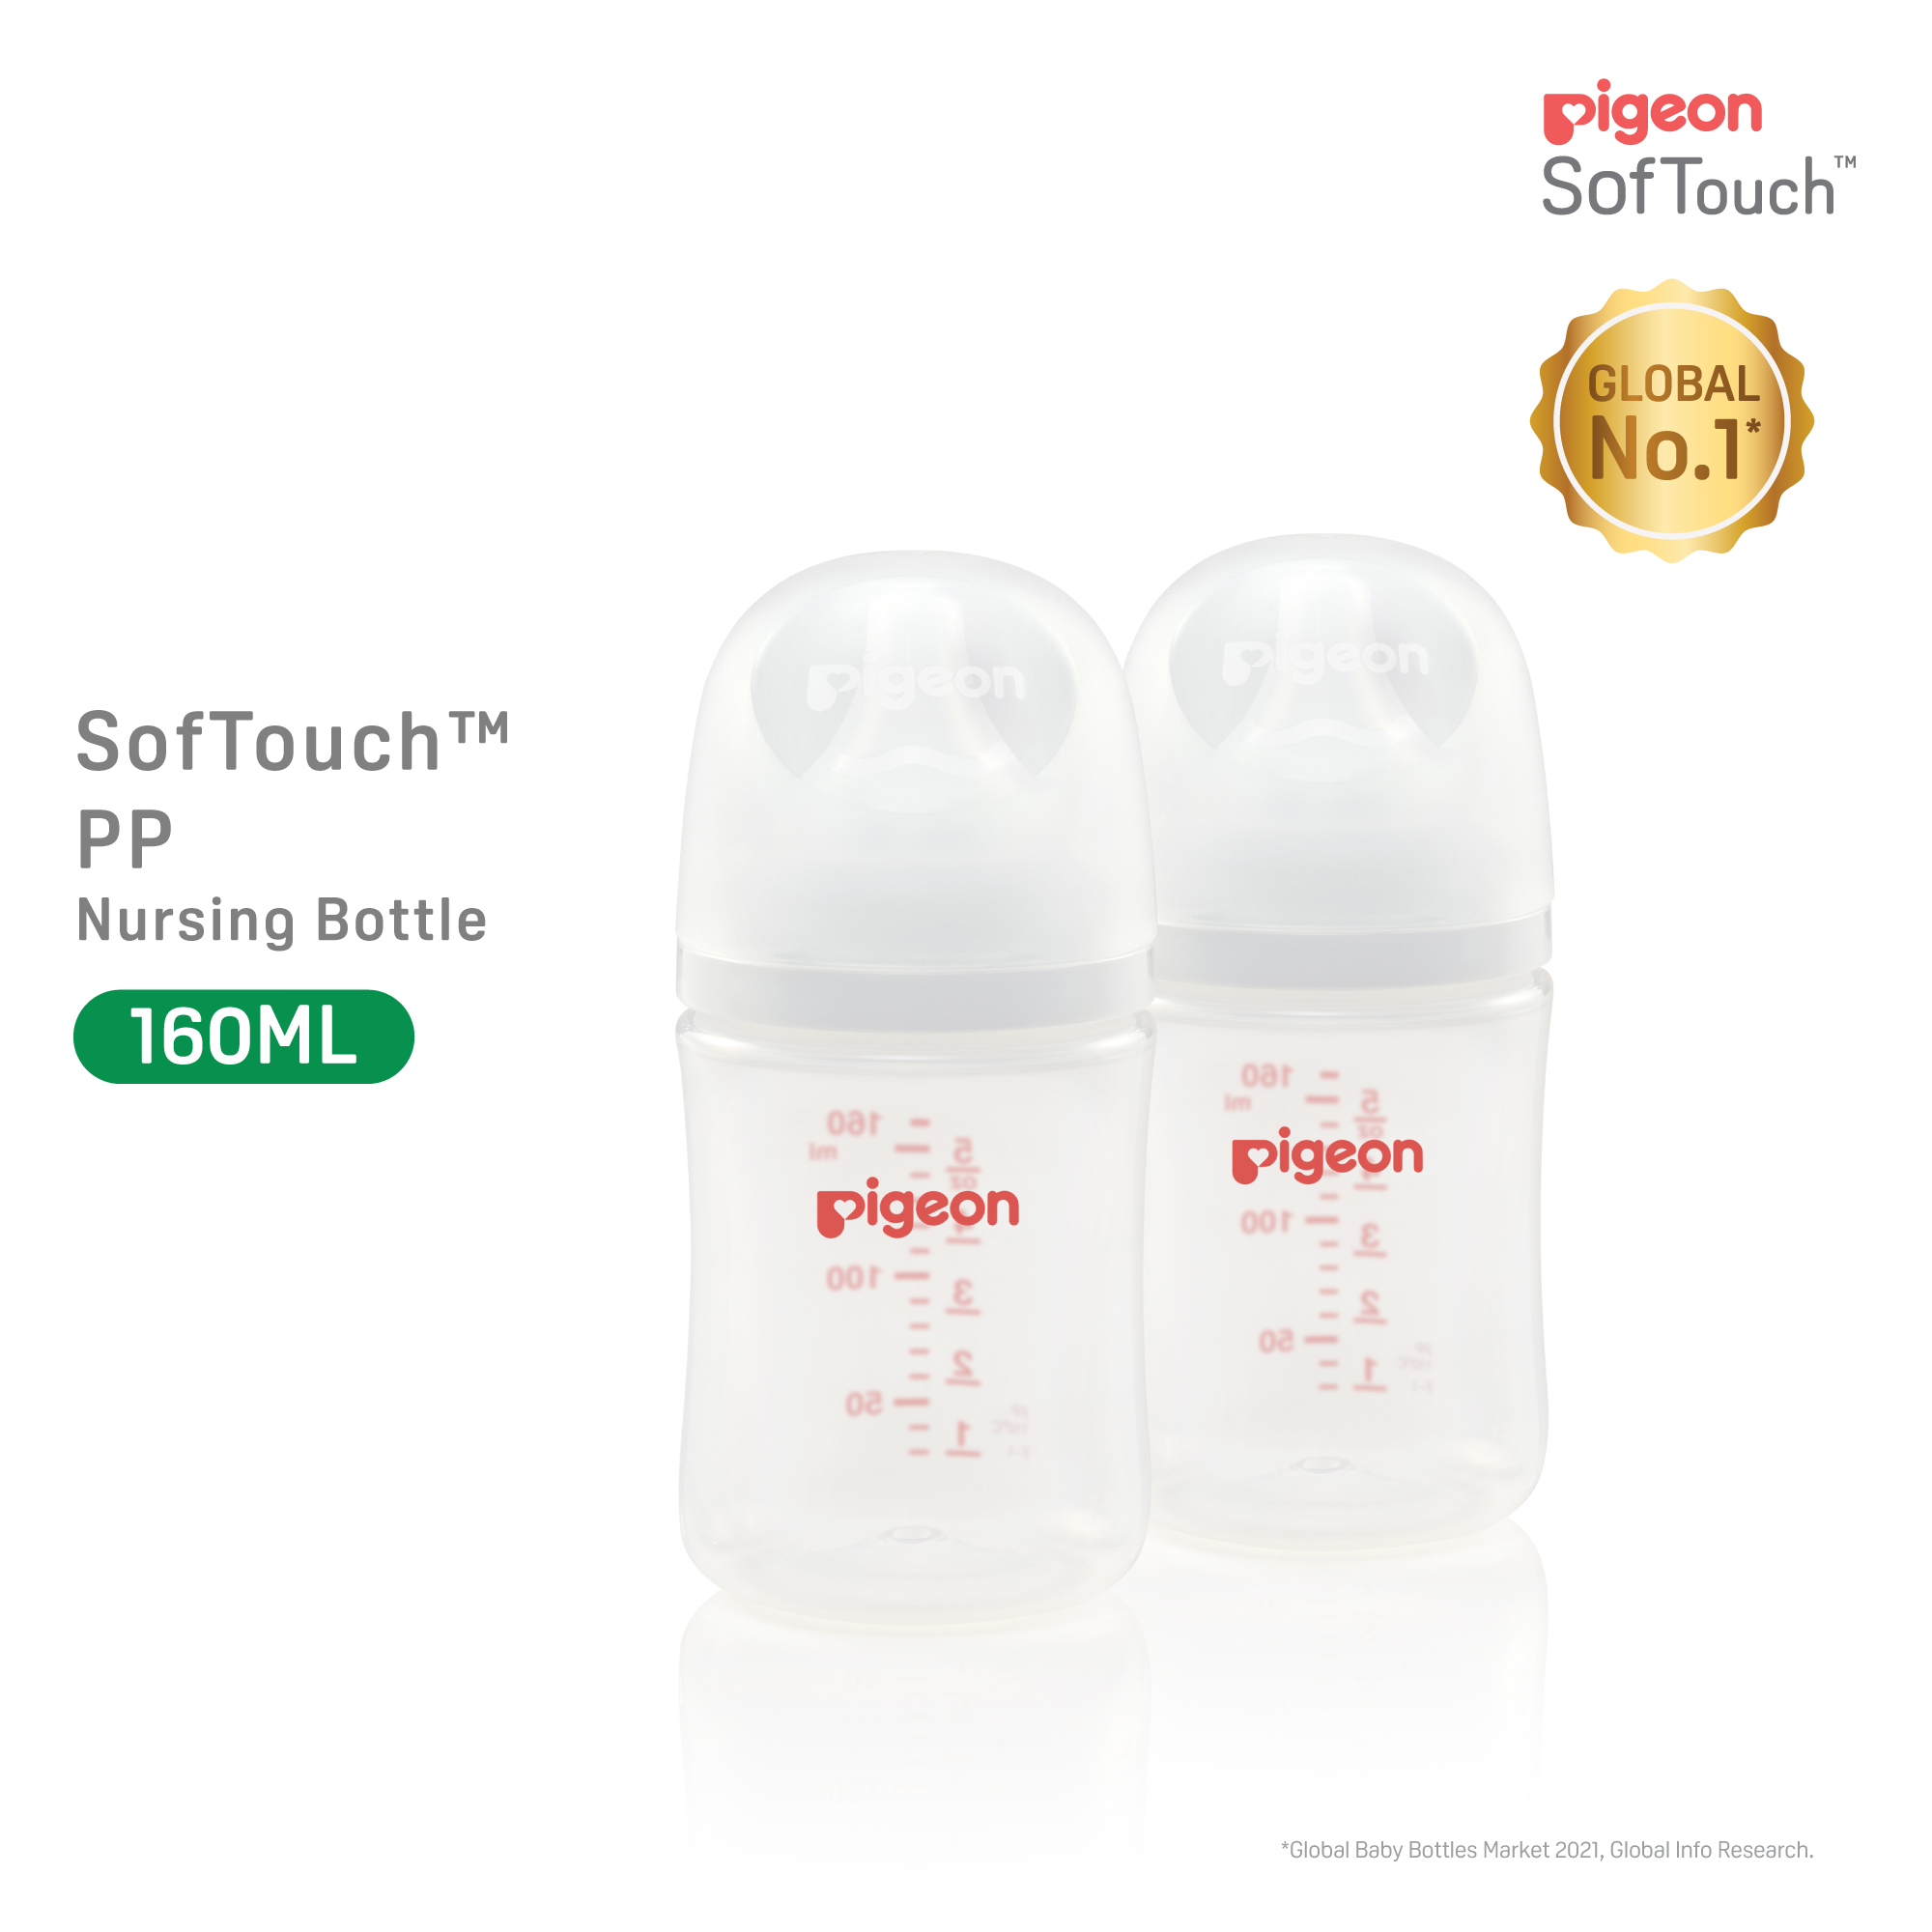 Pigeon SofTouch 3 Nursing Bottle Twin Pack PP 160ml (PG-79455)